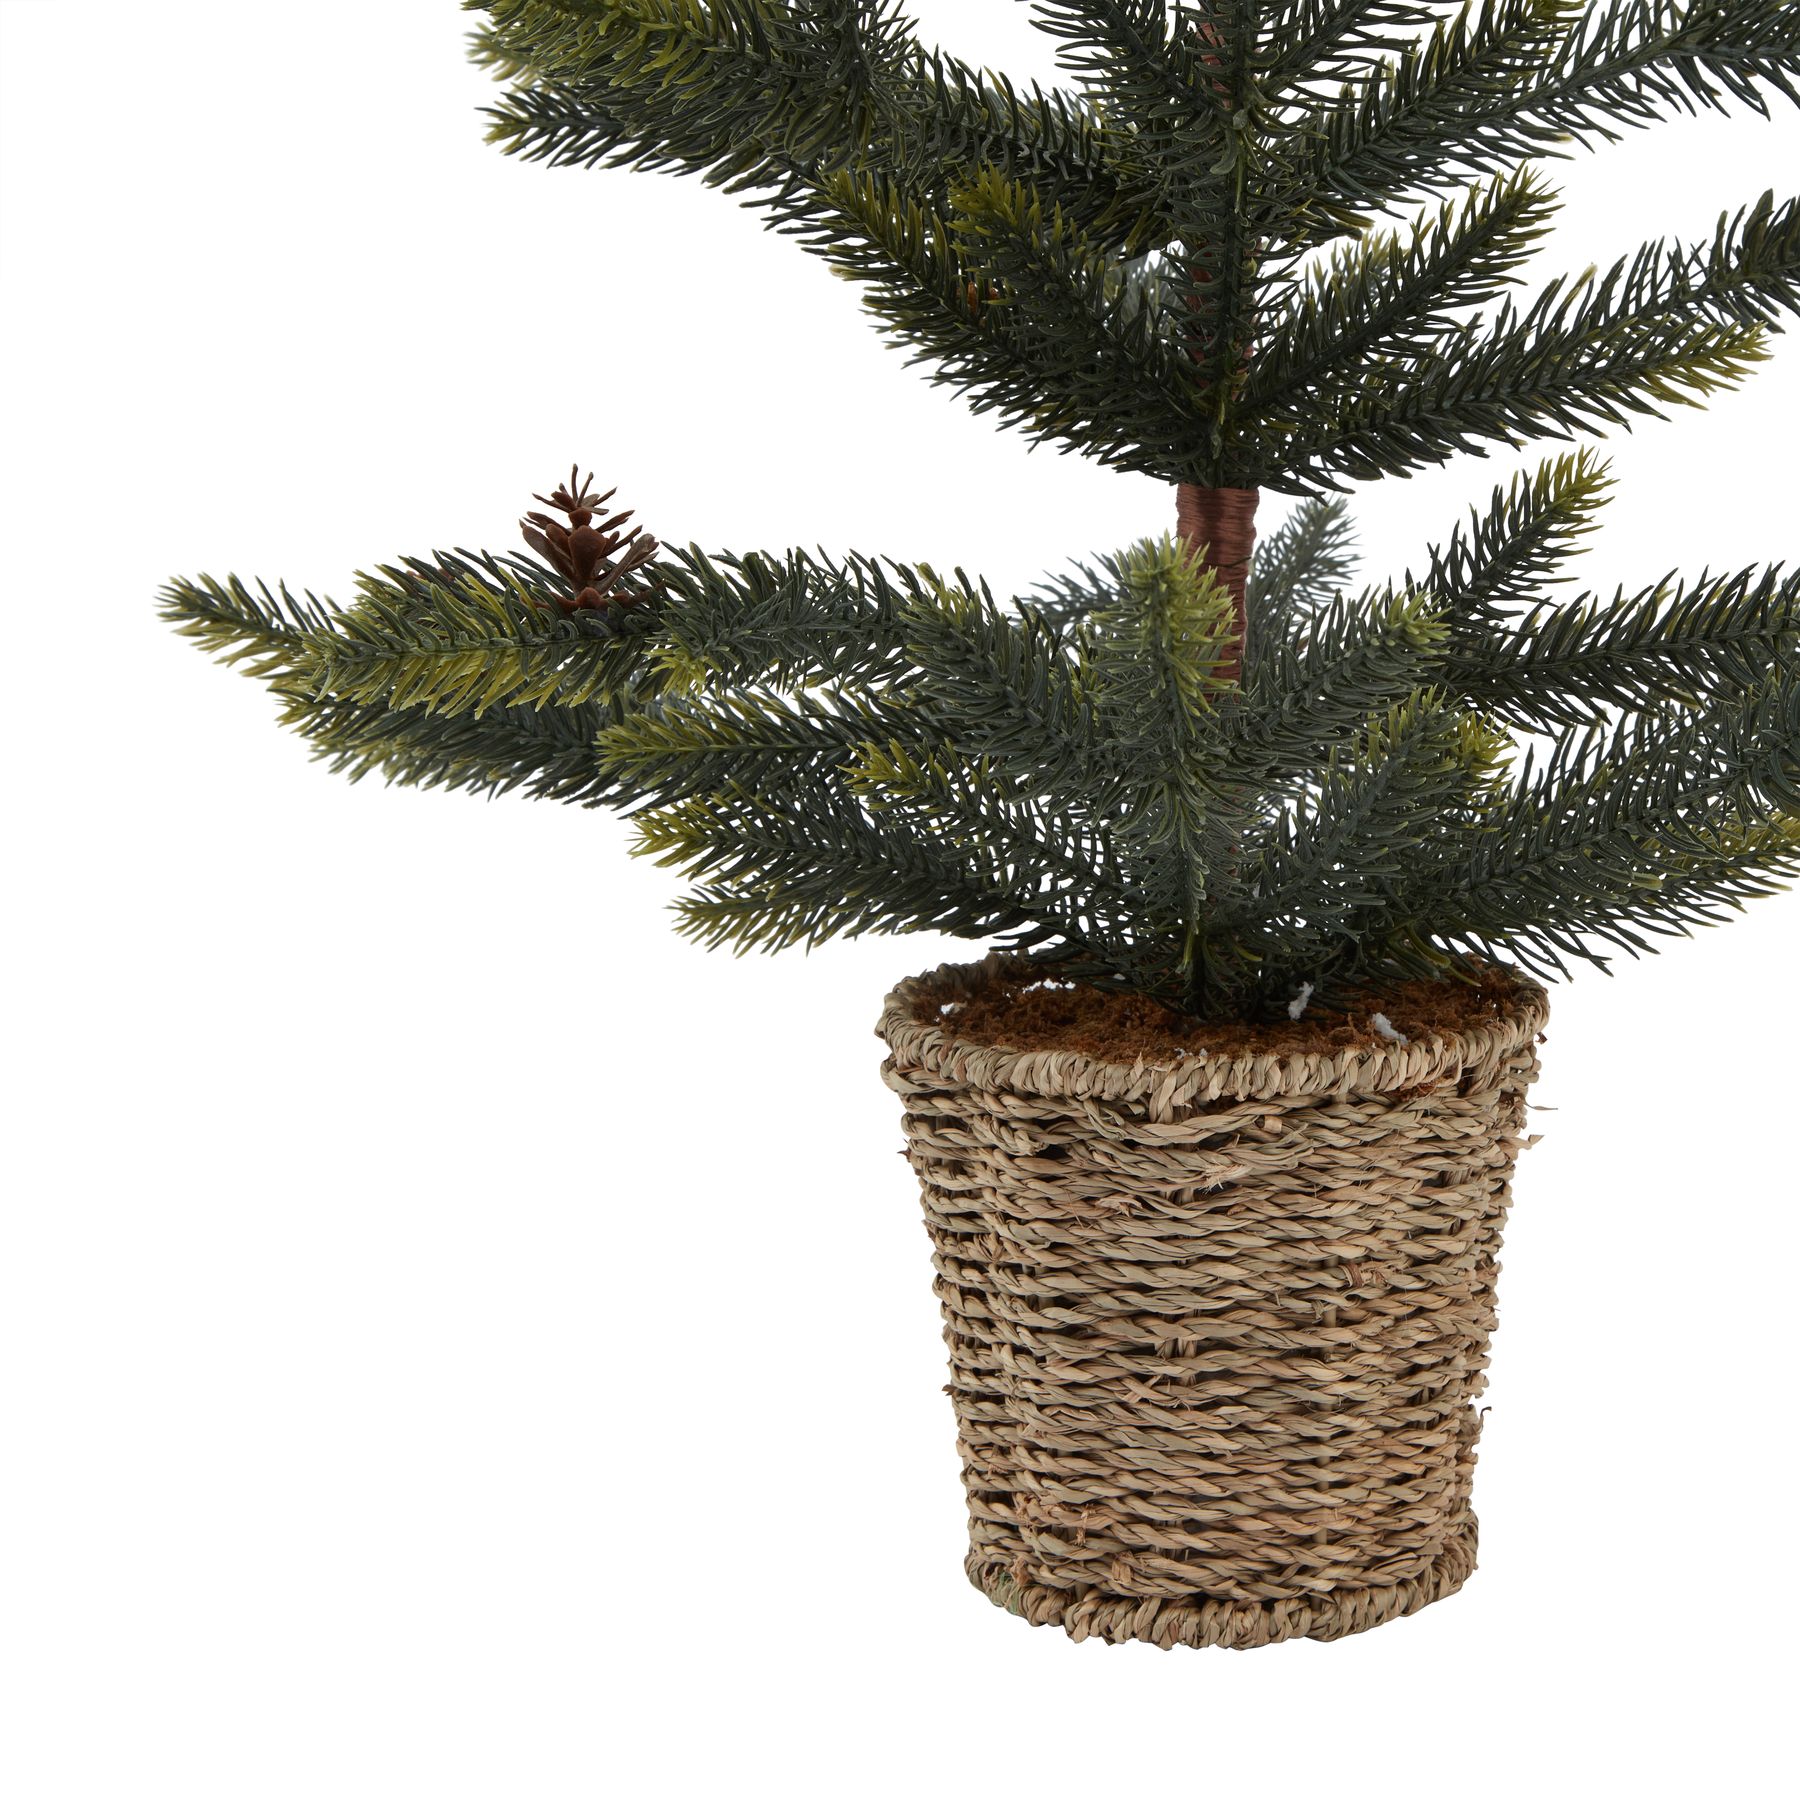 Medium Spruce Tree With Wicker Basket - Image 2